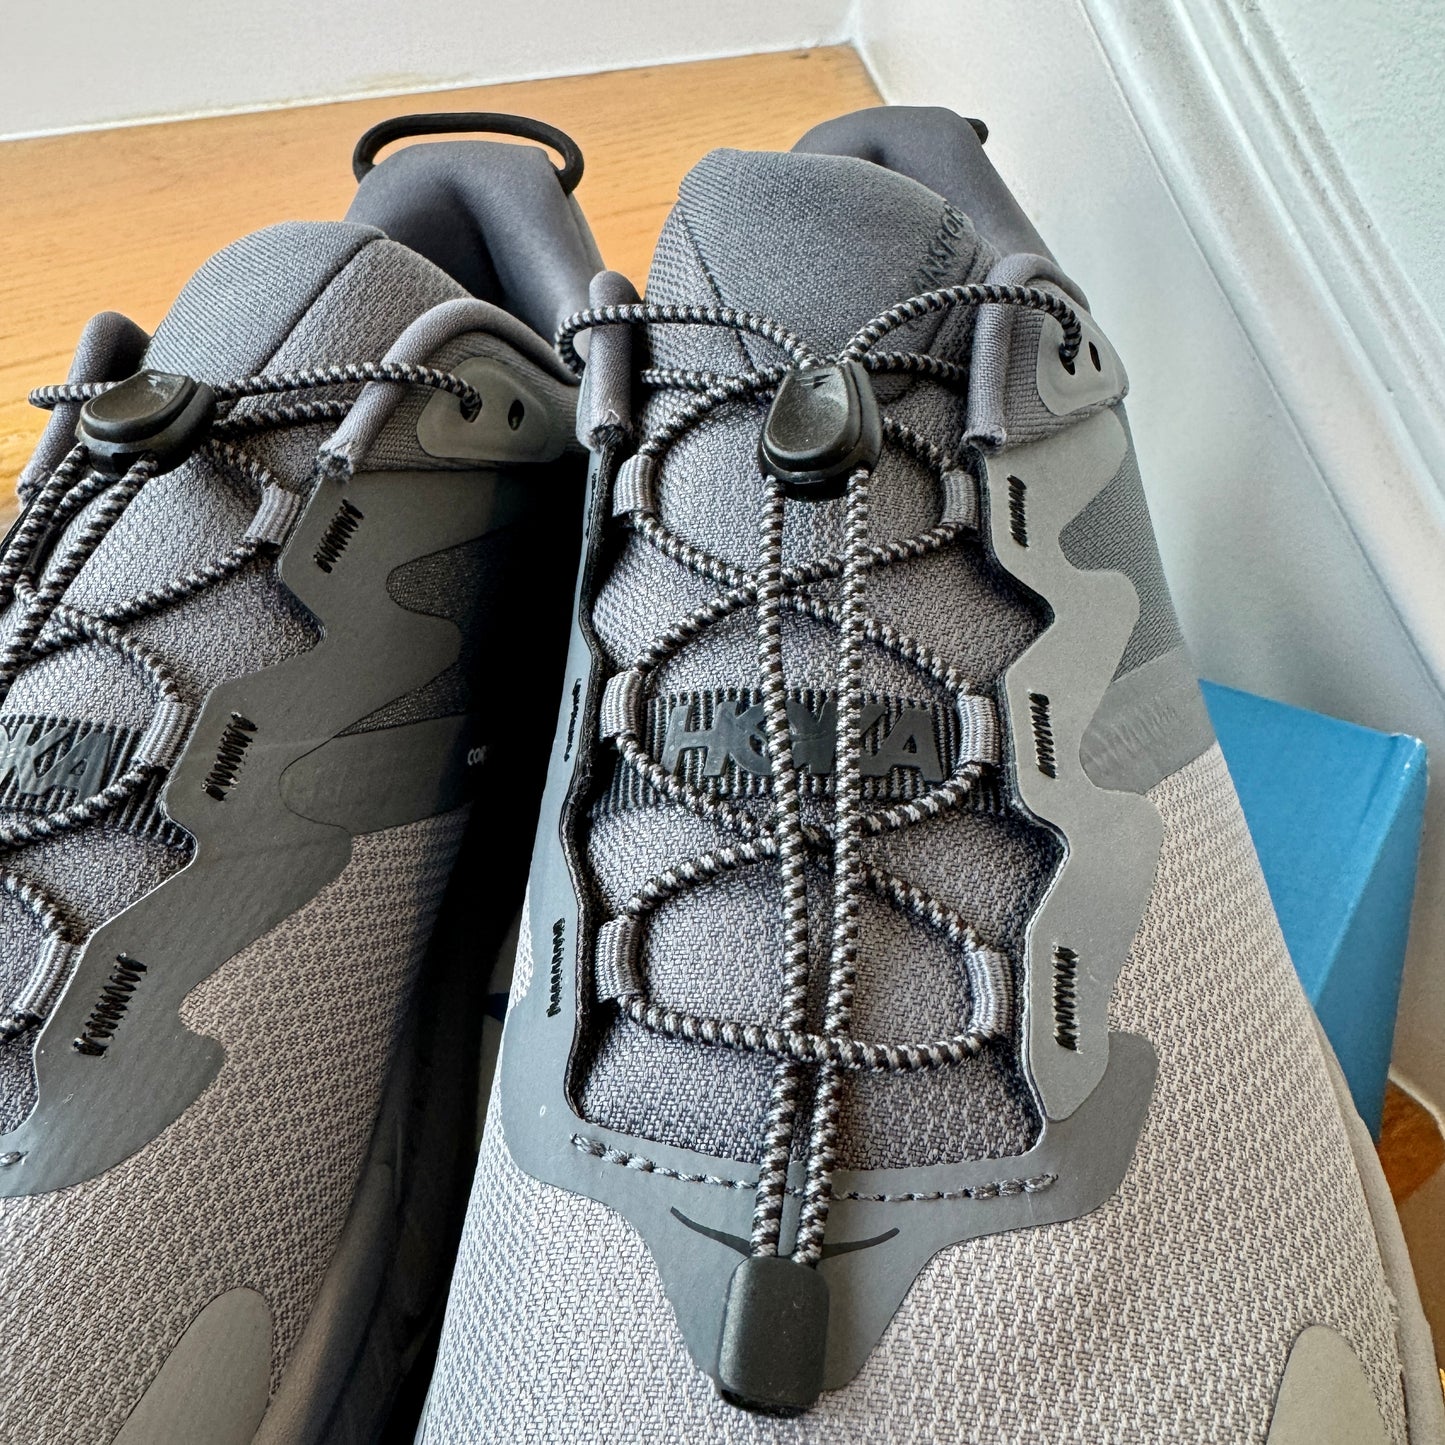 Hoka Transport Castlerock Grey / Black Athletic Hiking Shoes , Castle rock